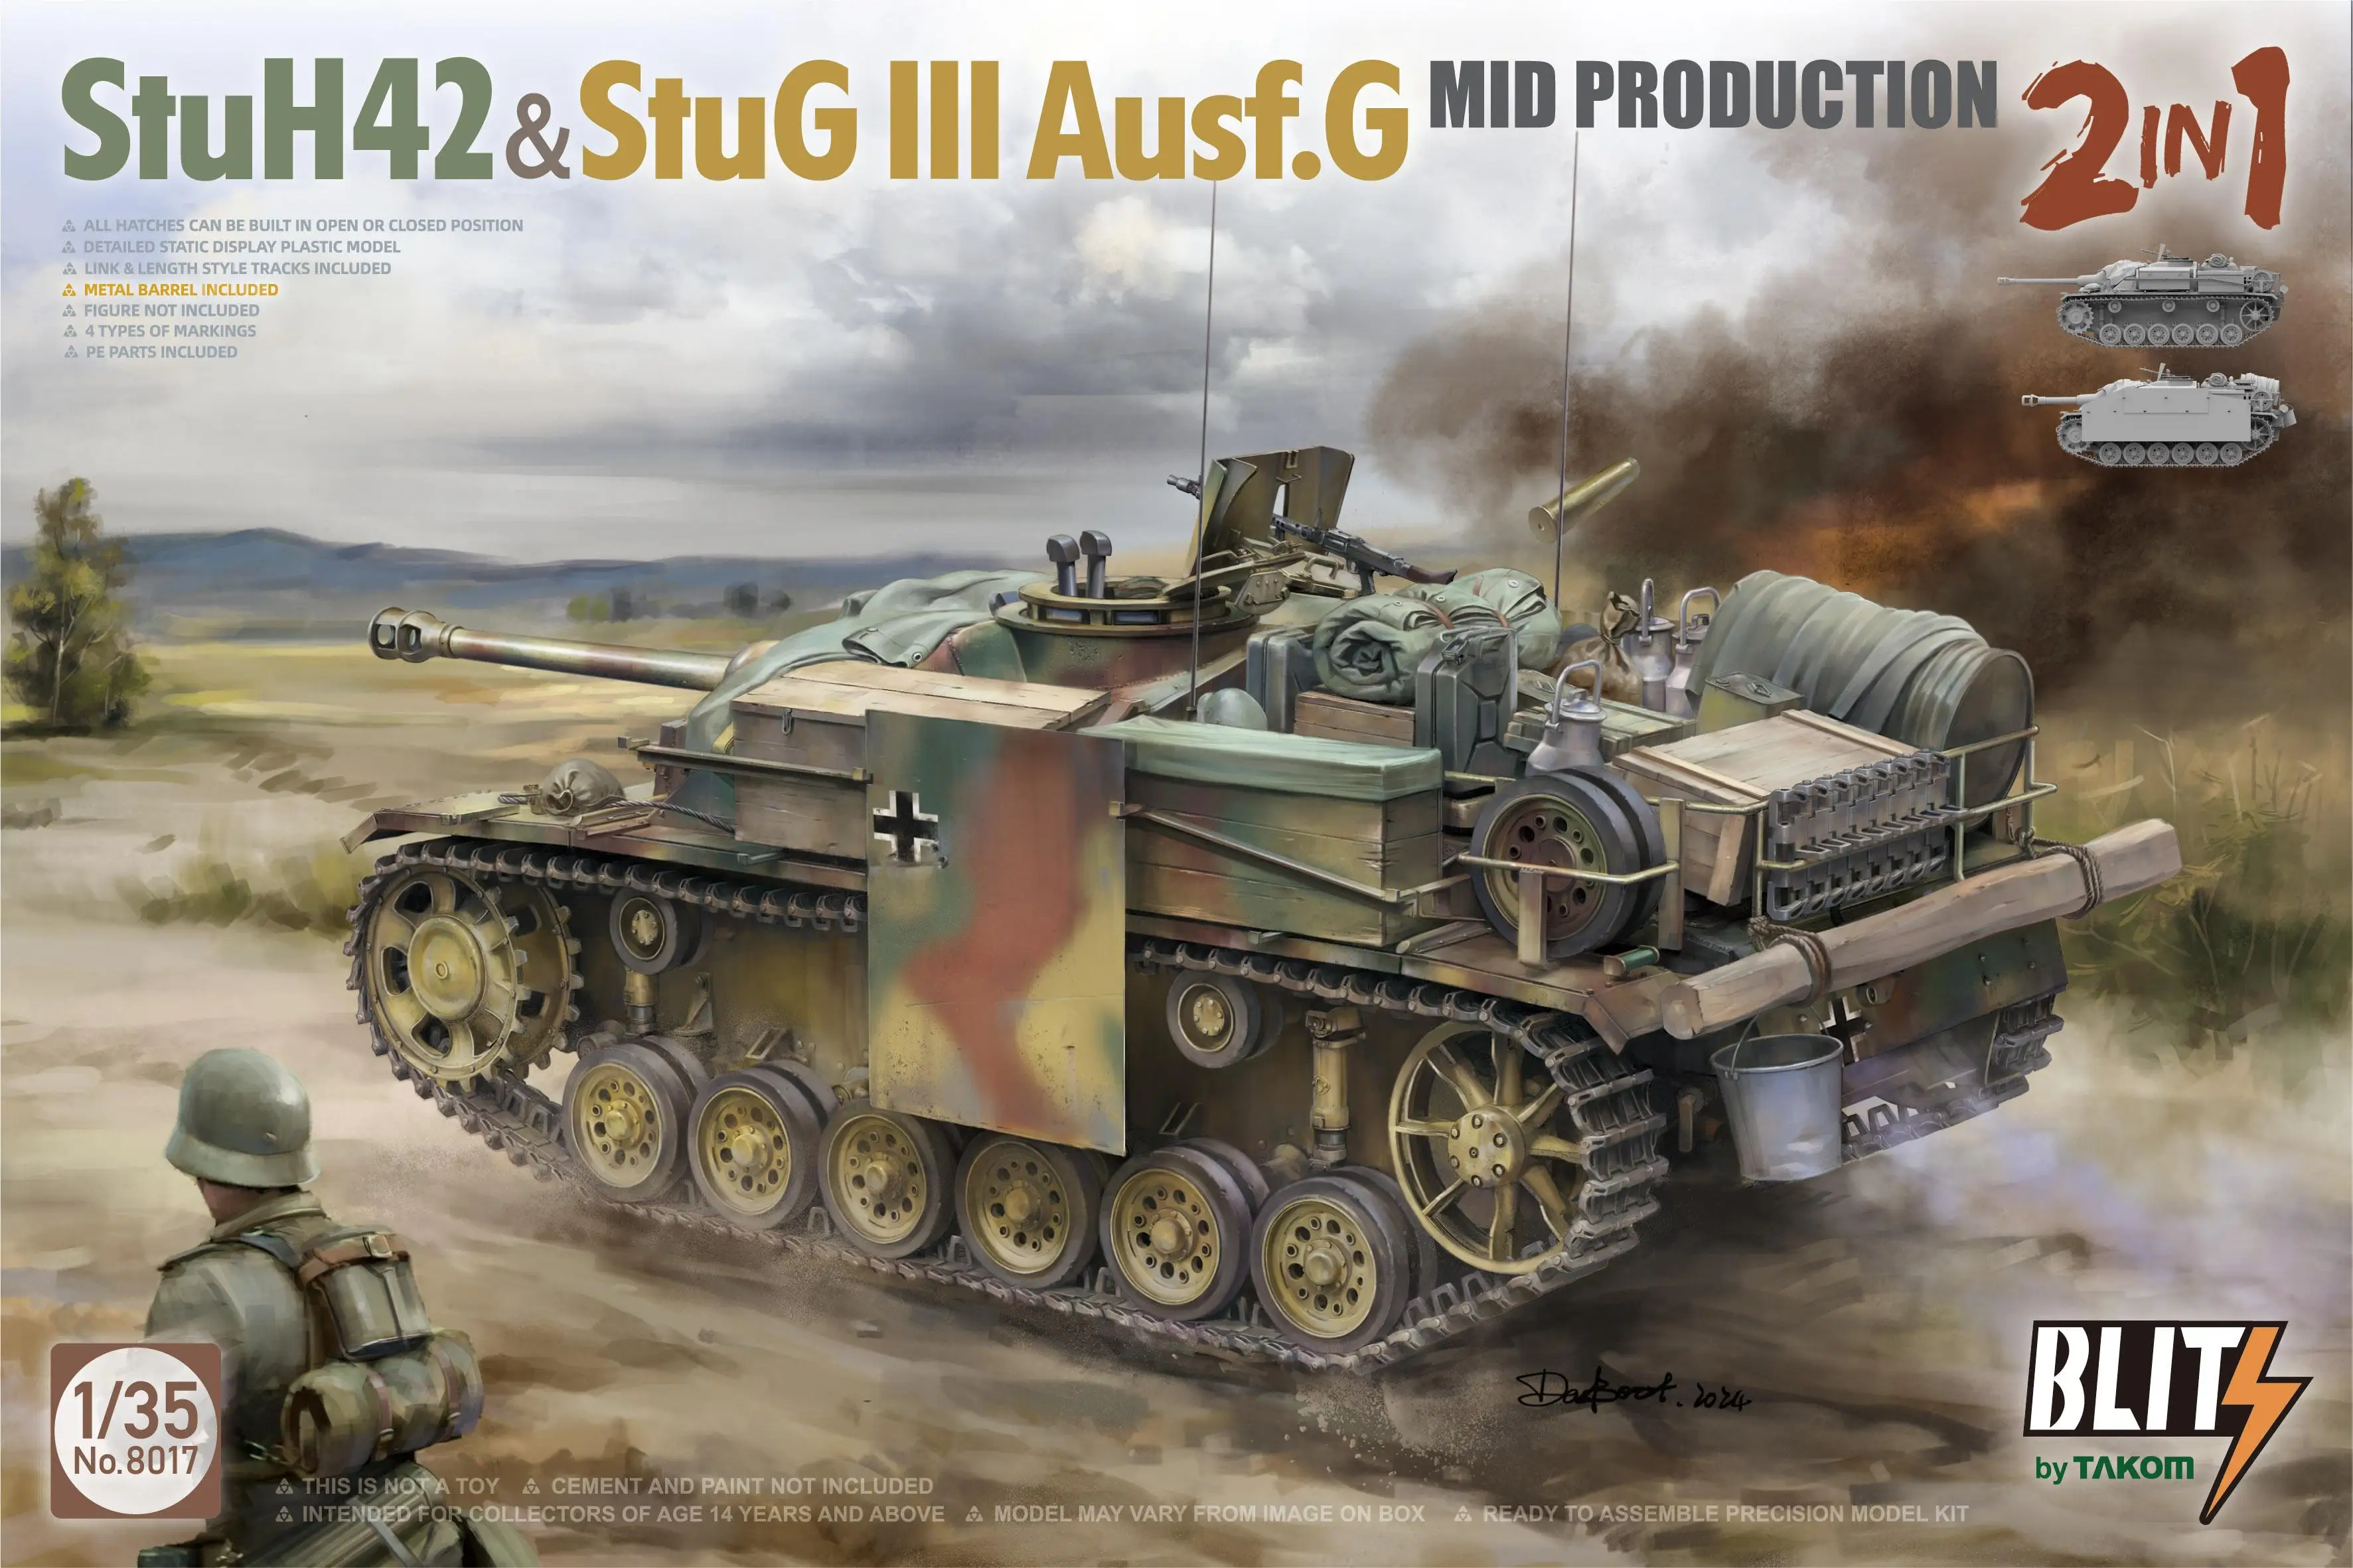 

TAKOM 8017 1/35 Scale StuH42 & StuGIII Ausf. G Mod Production 2 in 1 w/bonus Stowage Model Kit